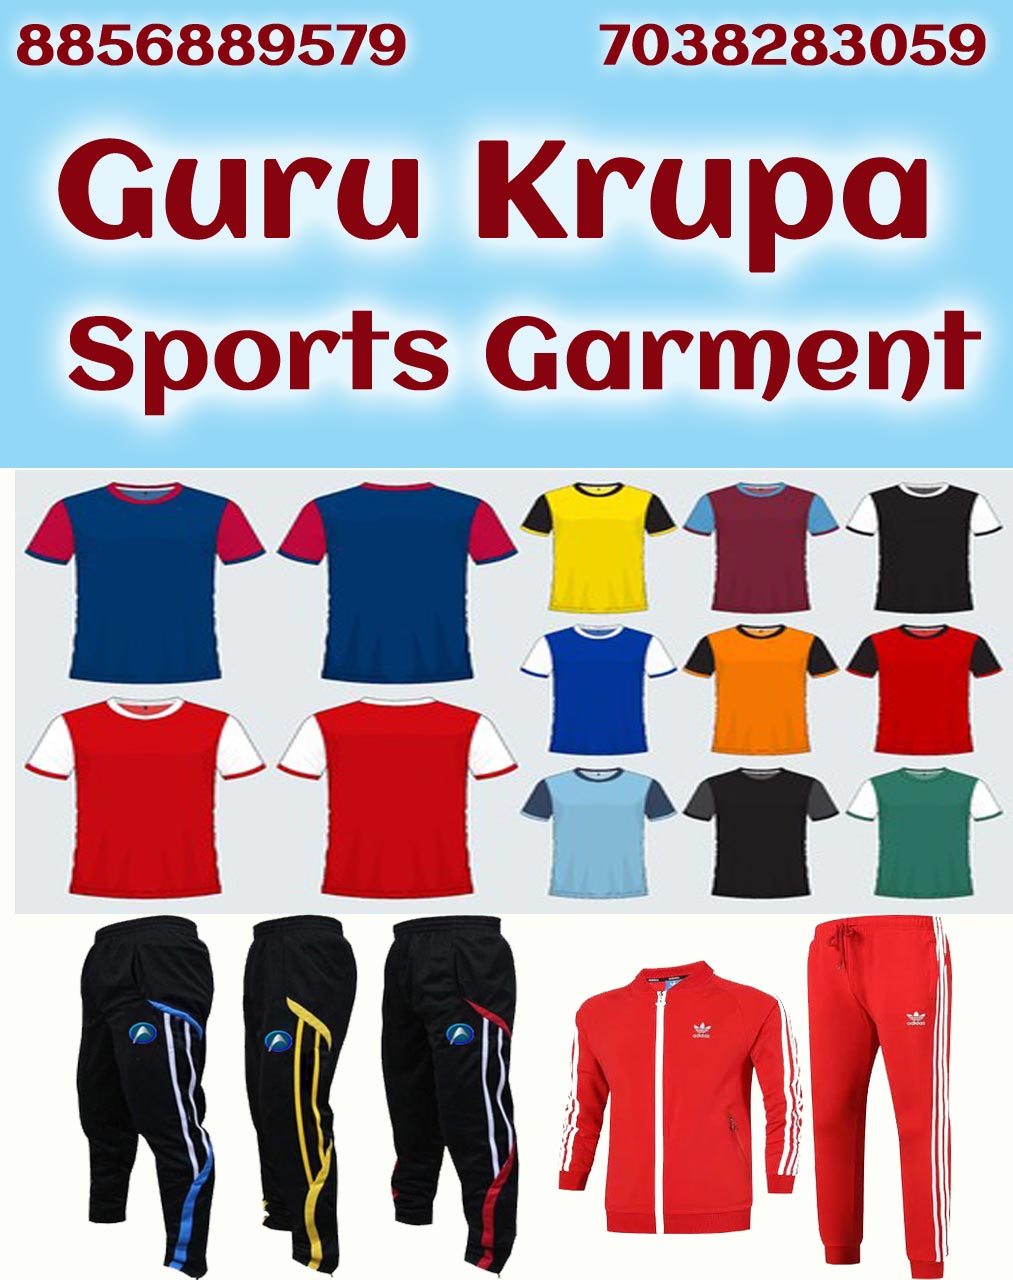 Guru Krupa Sports Garment